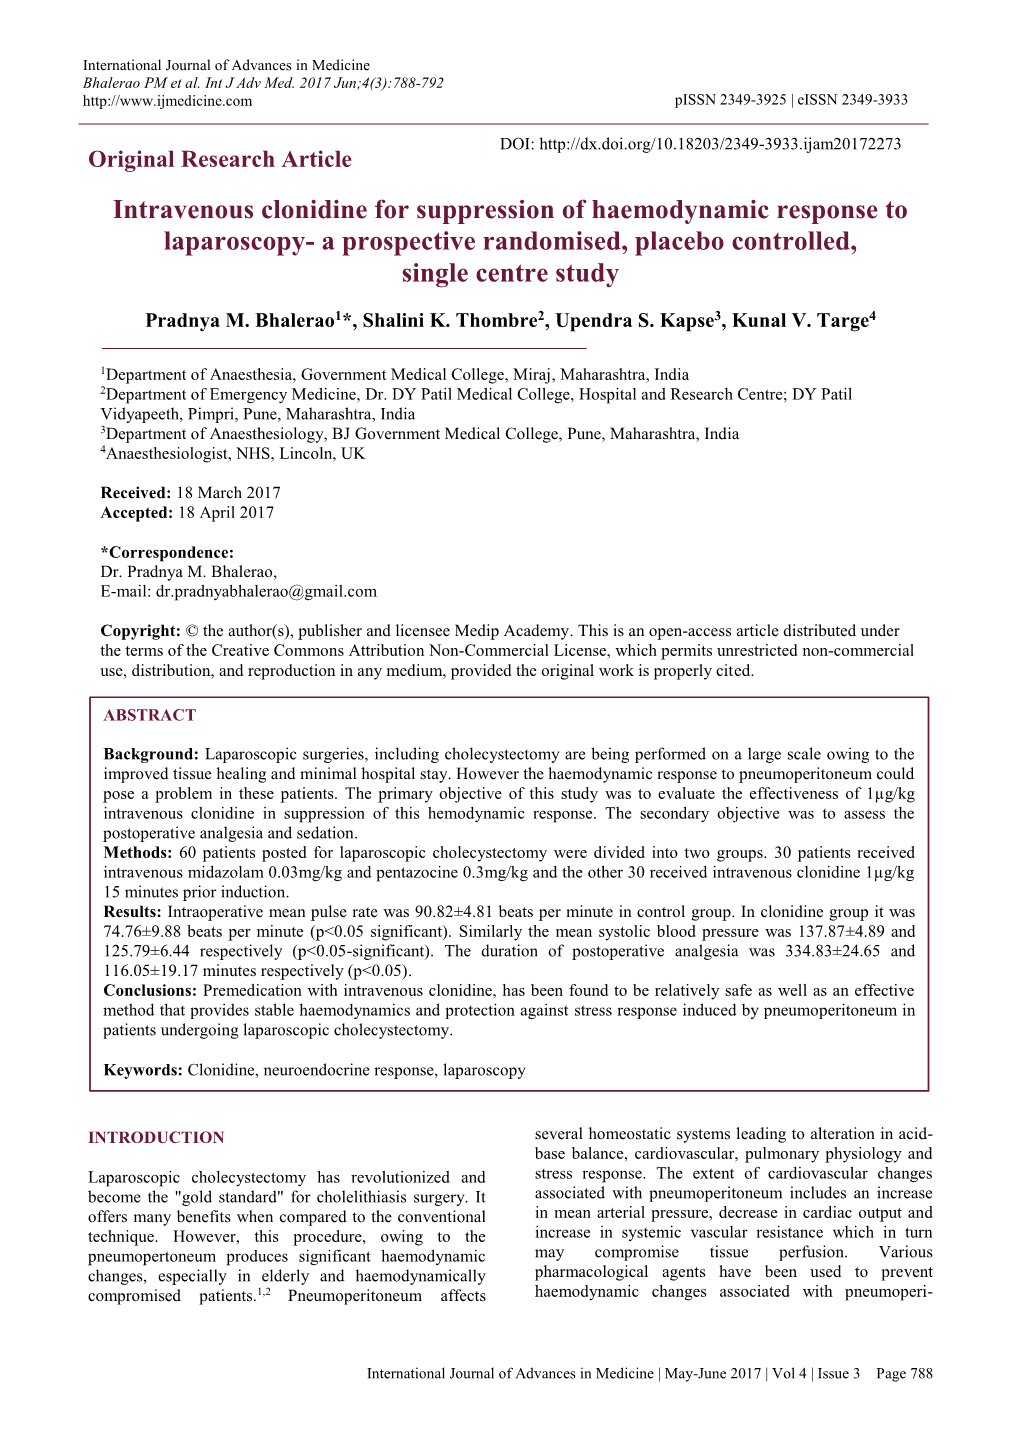 Intravenous Clonidine for Suppression of Haemodynamic Response to Laparoscopy- a Prospective Randomised, Placebo Controlled, Single Centre Study